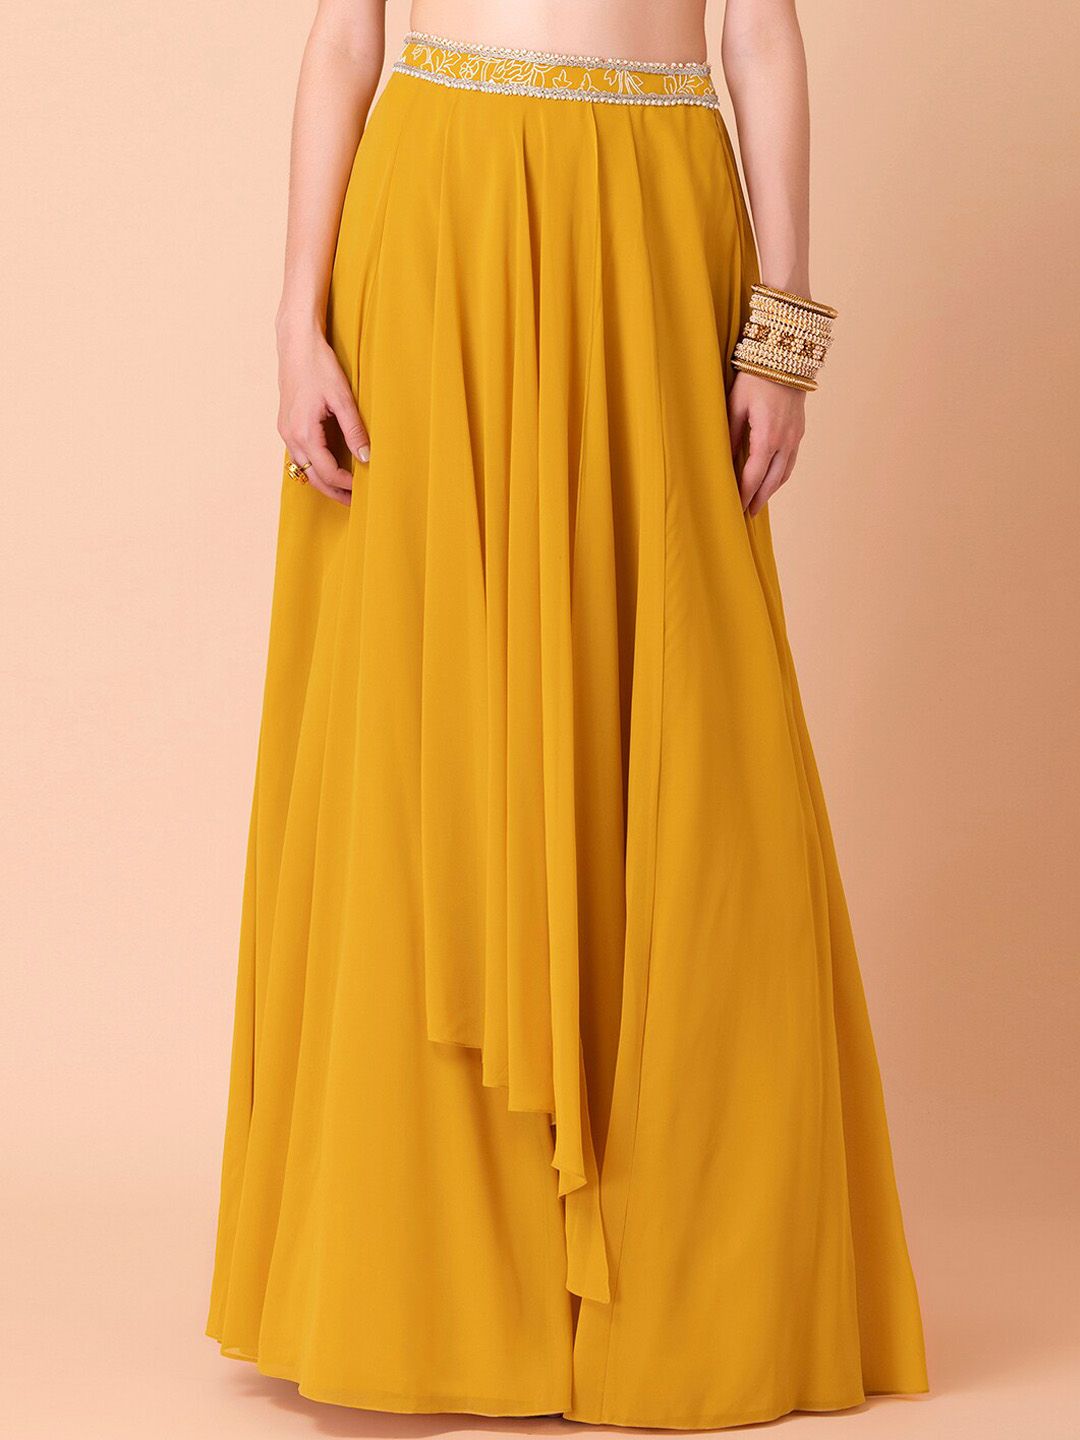 INDYA X Ridhi Mehra Women Yellow Solid Maxi Lehenga Skirt Price in India